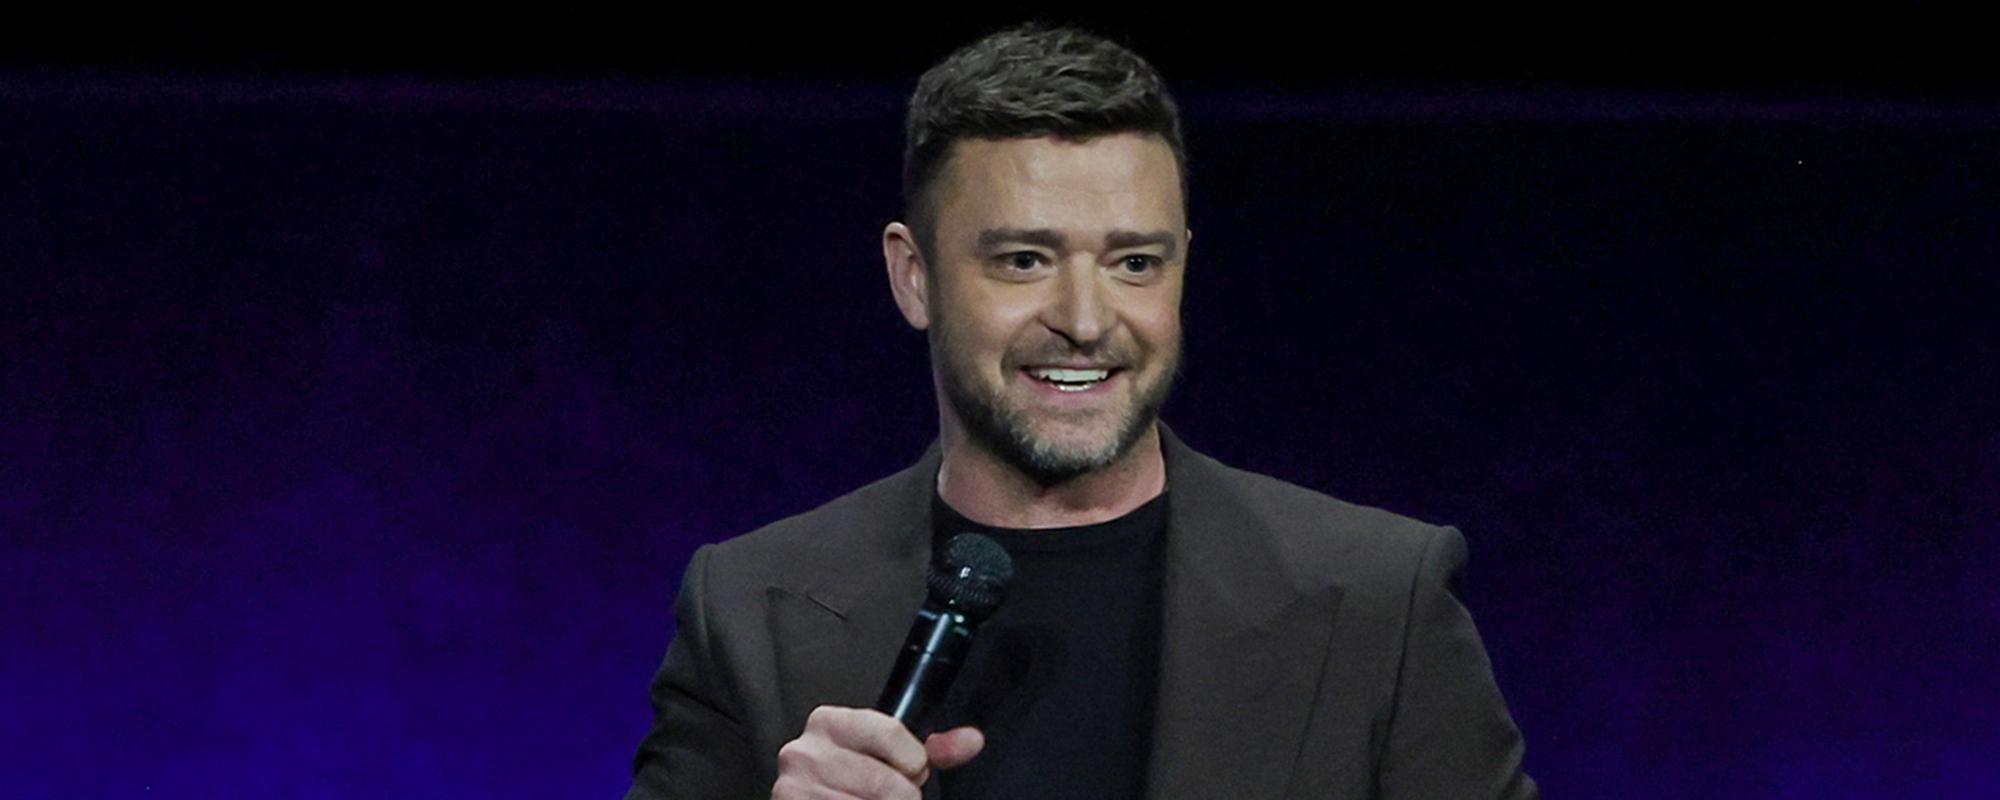 “Blink Twice”: Justin Timberlake Cryptically Teases *NYSNC Collaboration on New Album